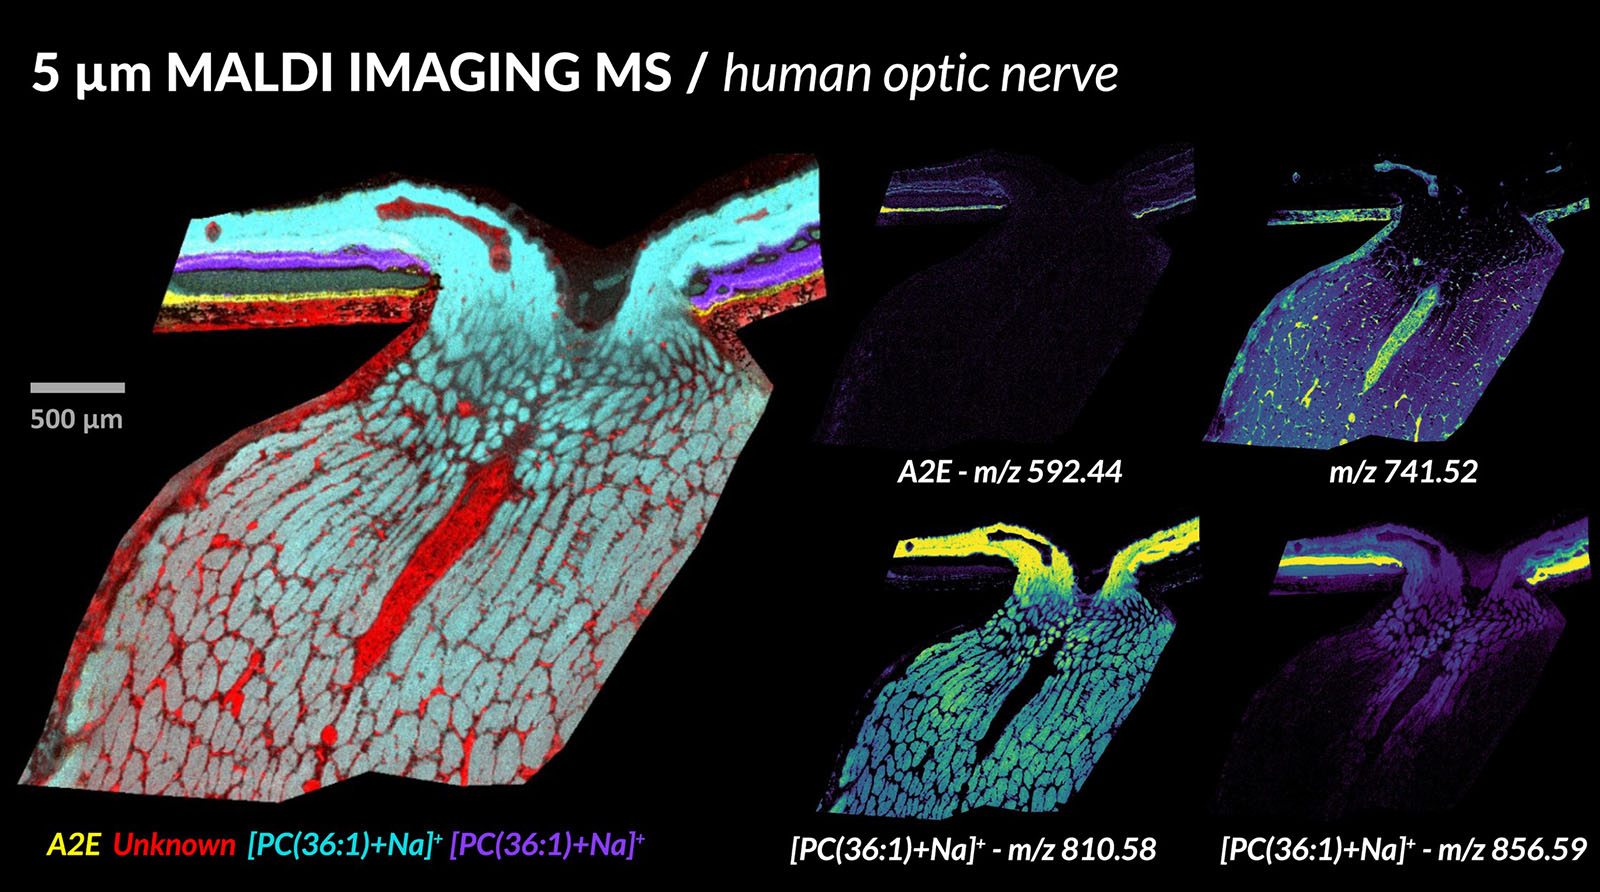 MALDI image of human optic nerve, courtesy of Dave Anderson from Vanderbilt